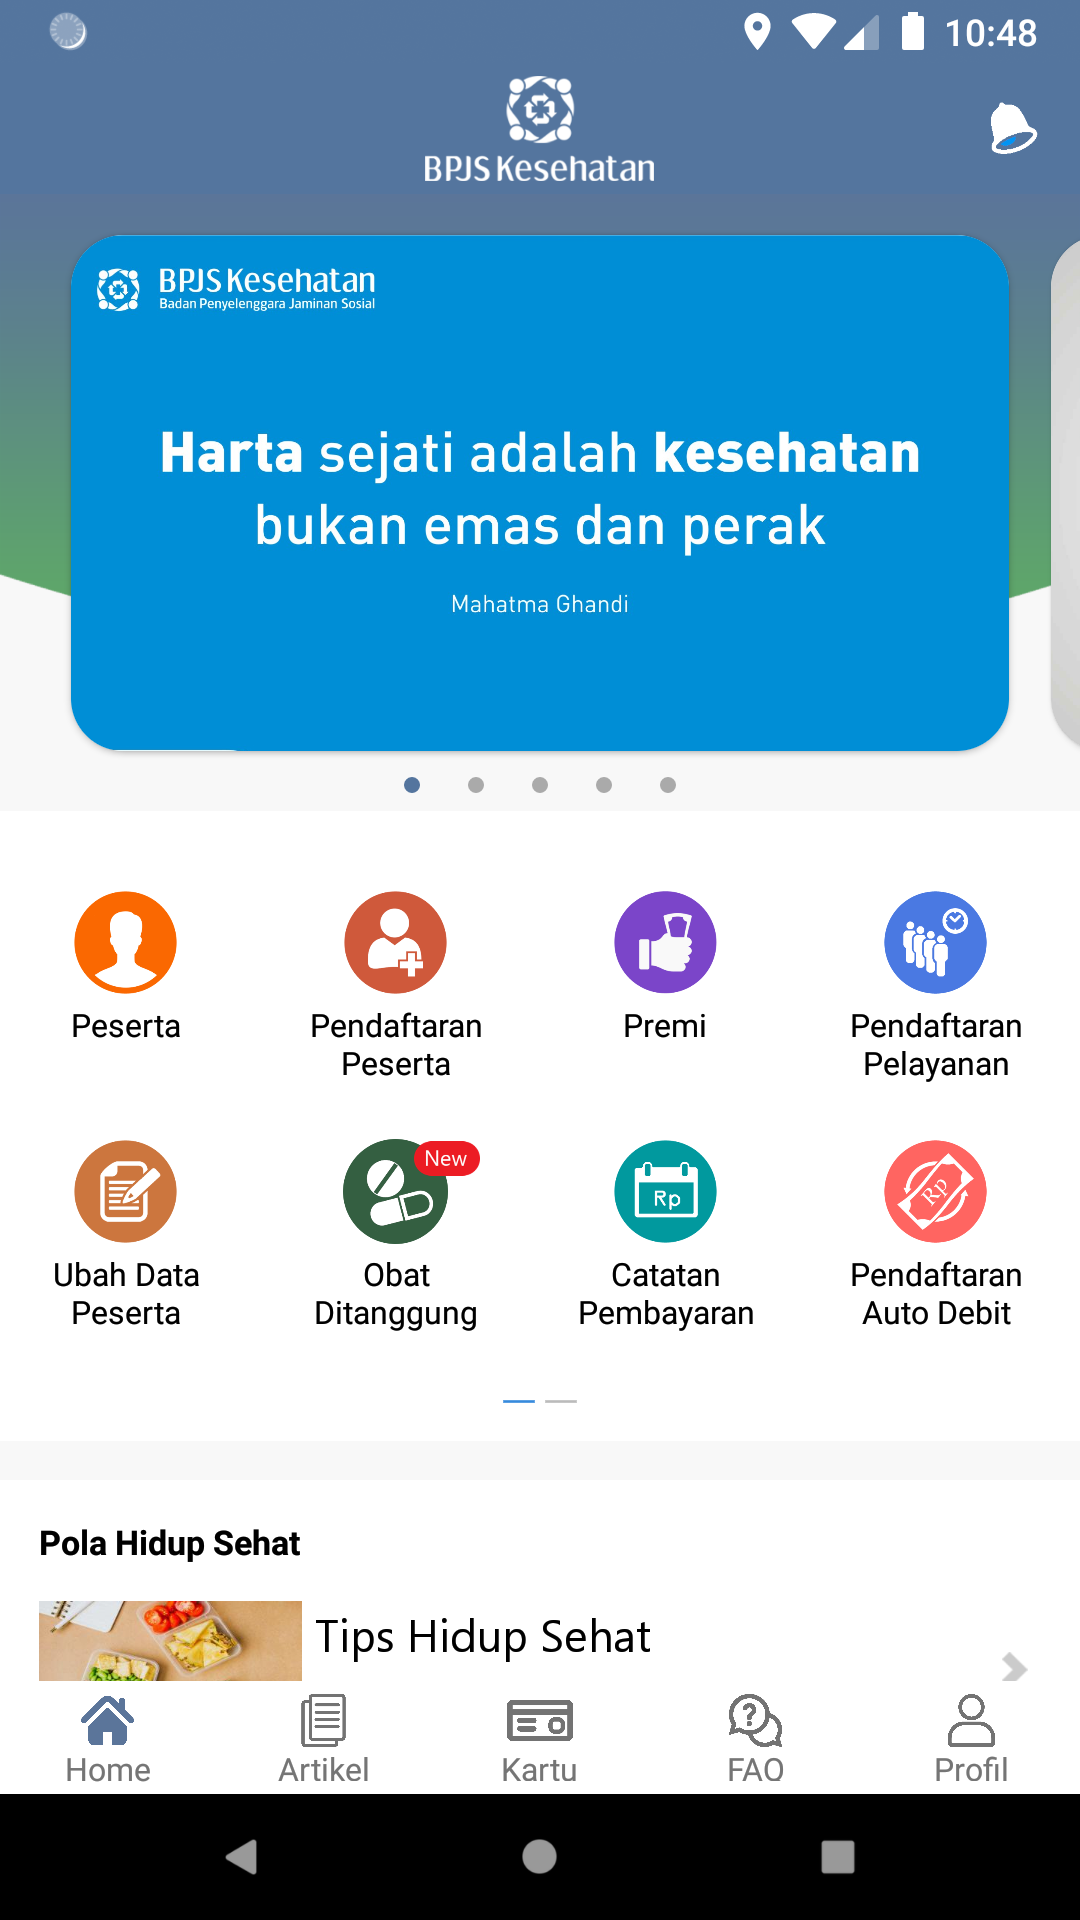 Mobile JKN APK 3.3.0 Download for Android Download Mobile JKN APK